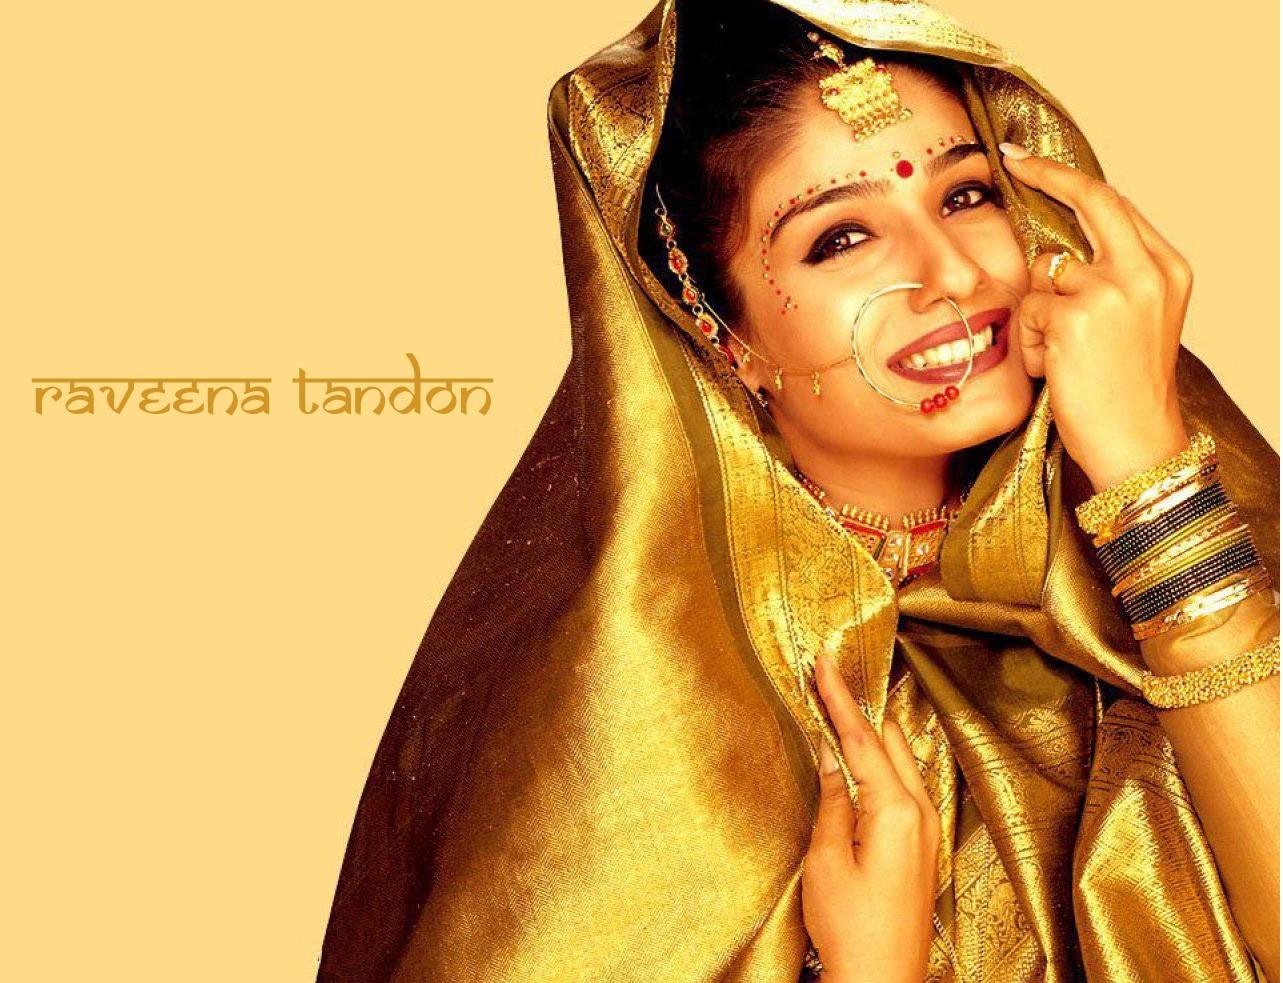 raveena tandon wallpaper,facial expression,beauty,smile,photography,happy